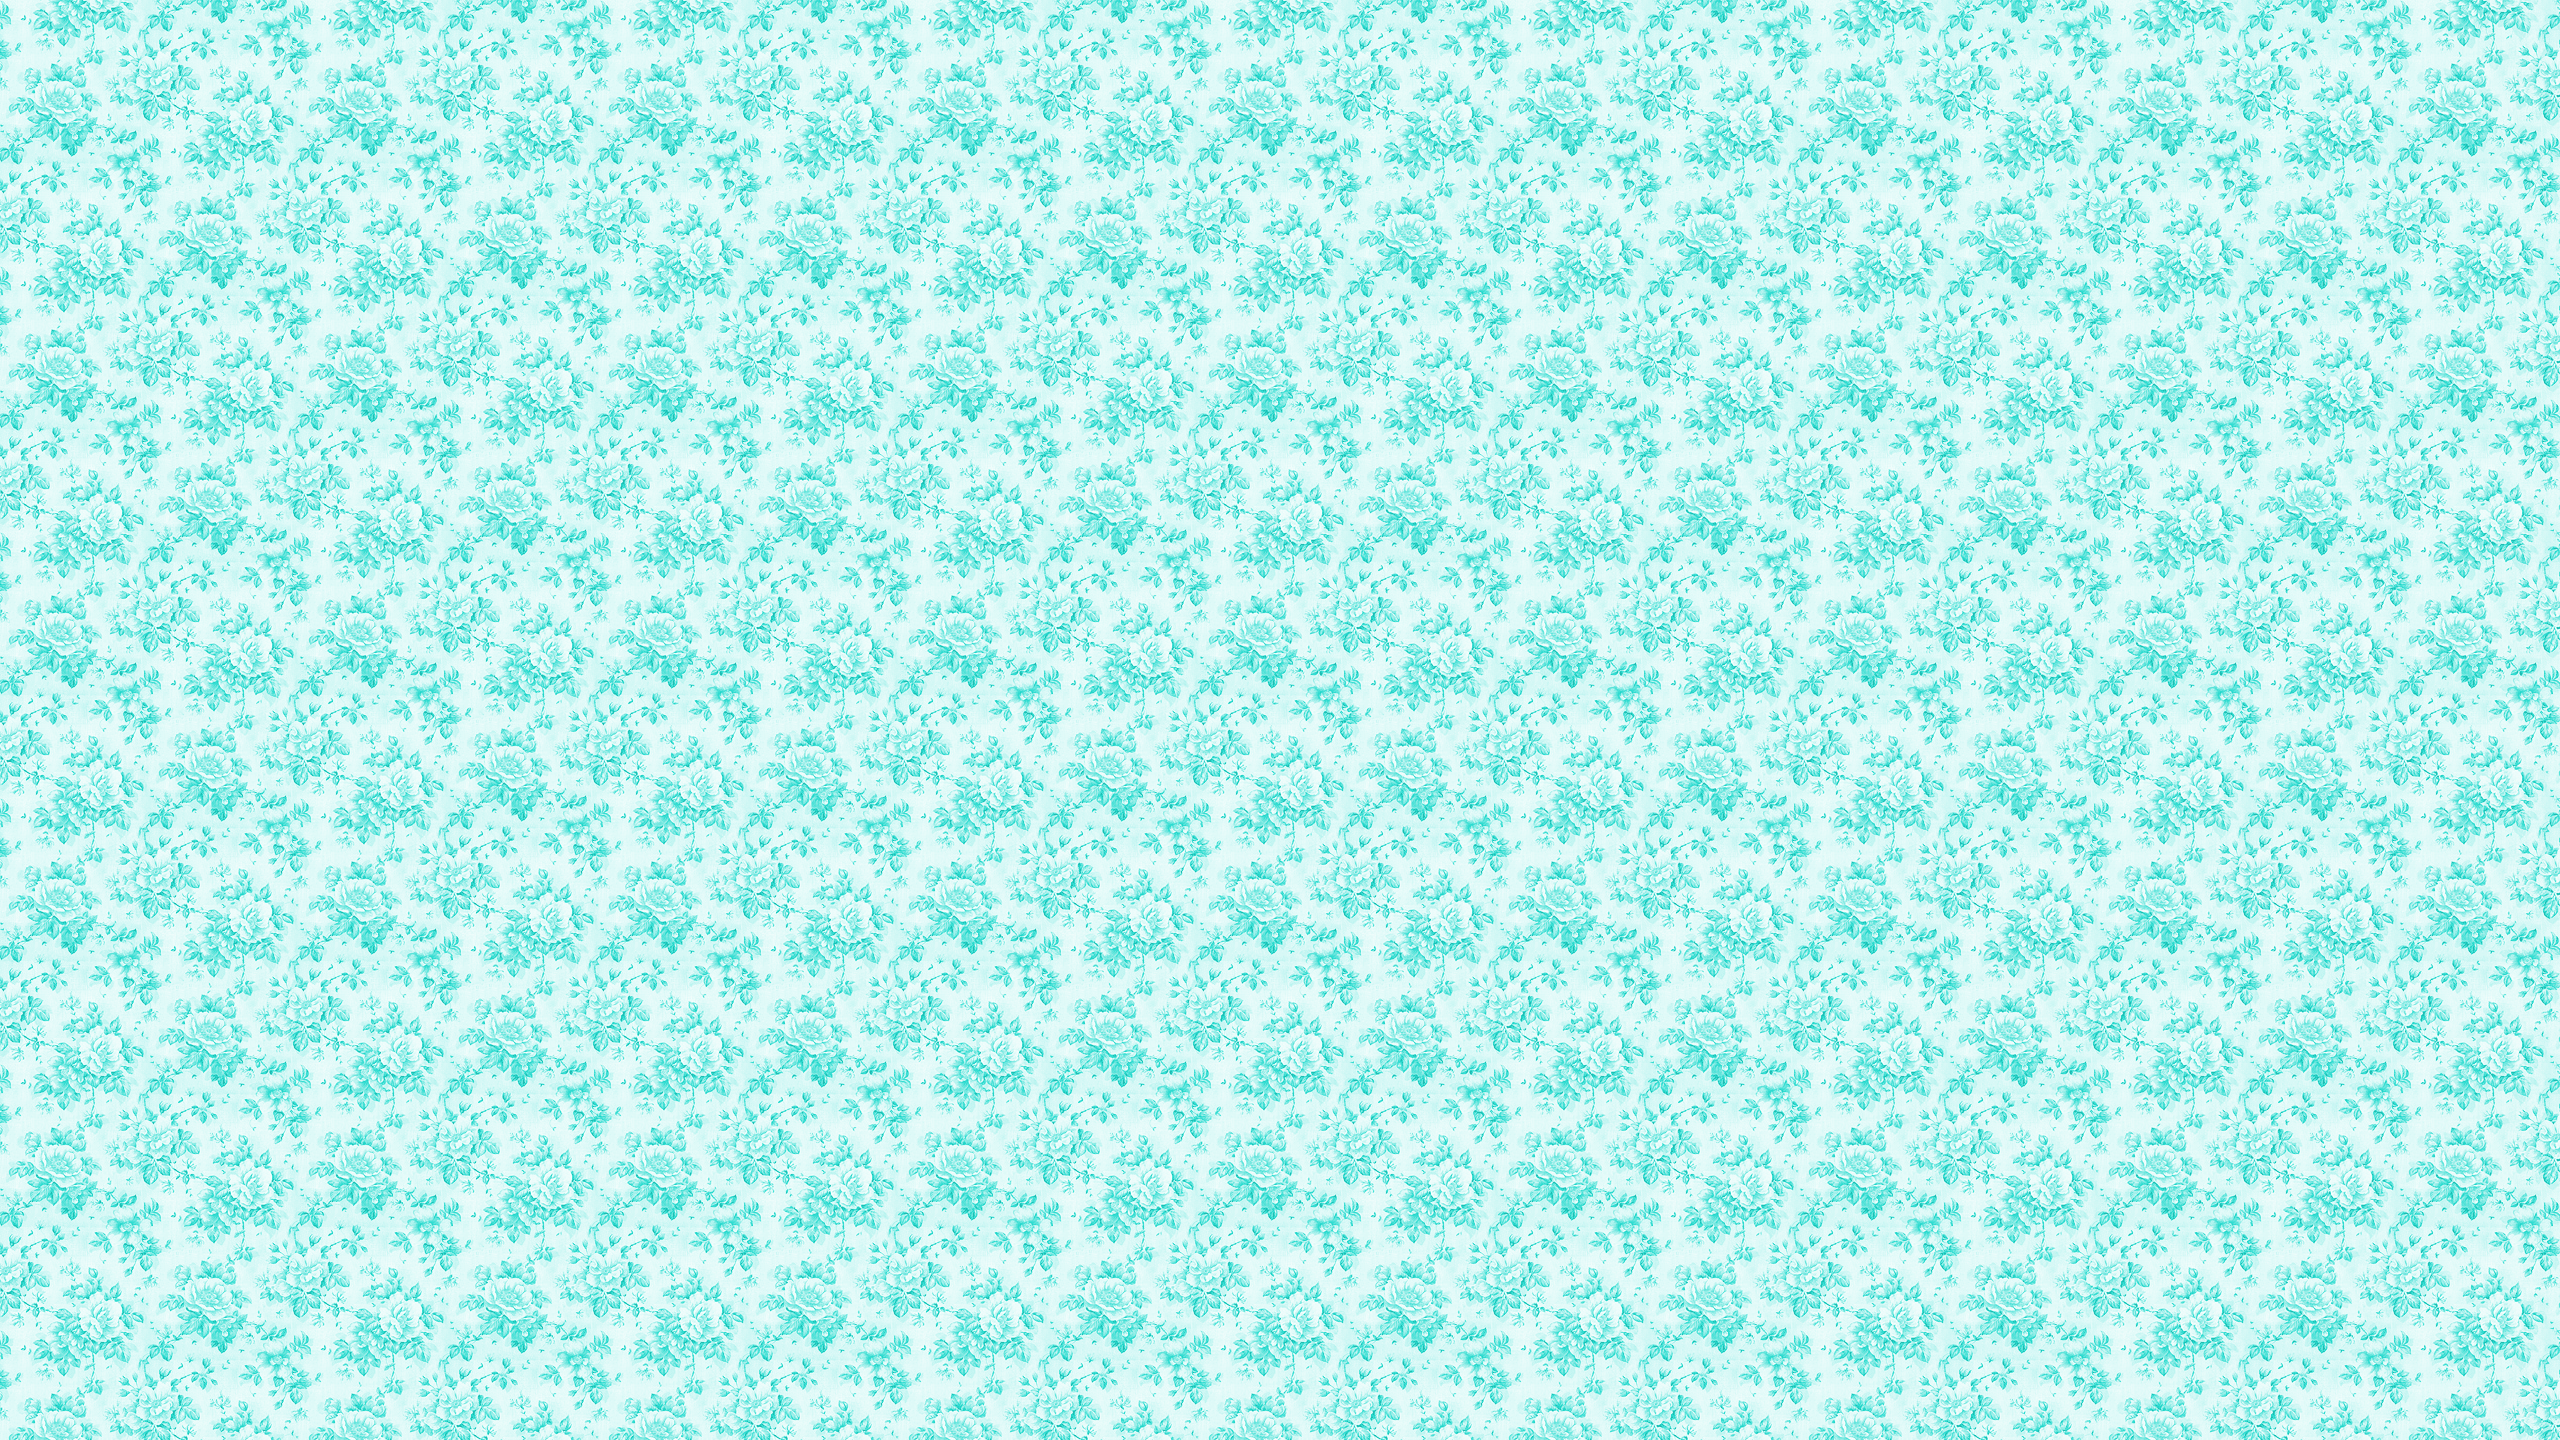 2560x1440 Mint Green Desktop Wallpaper, Free Stock Hình nền